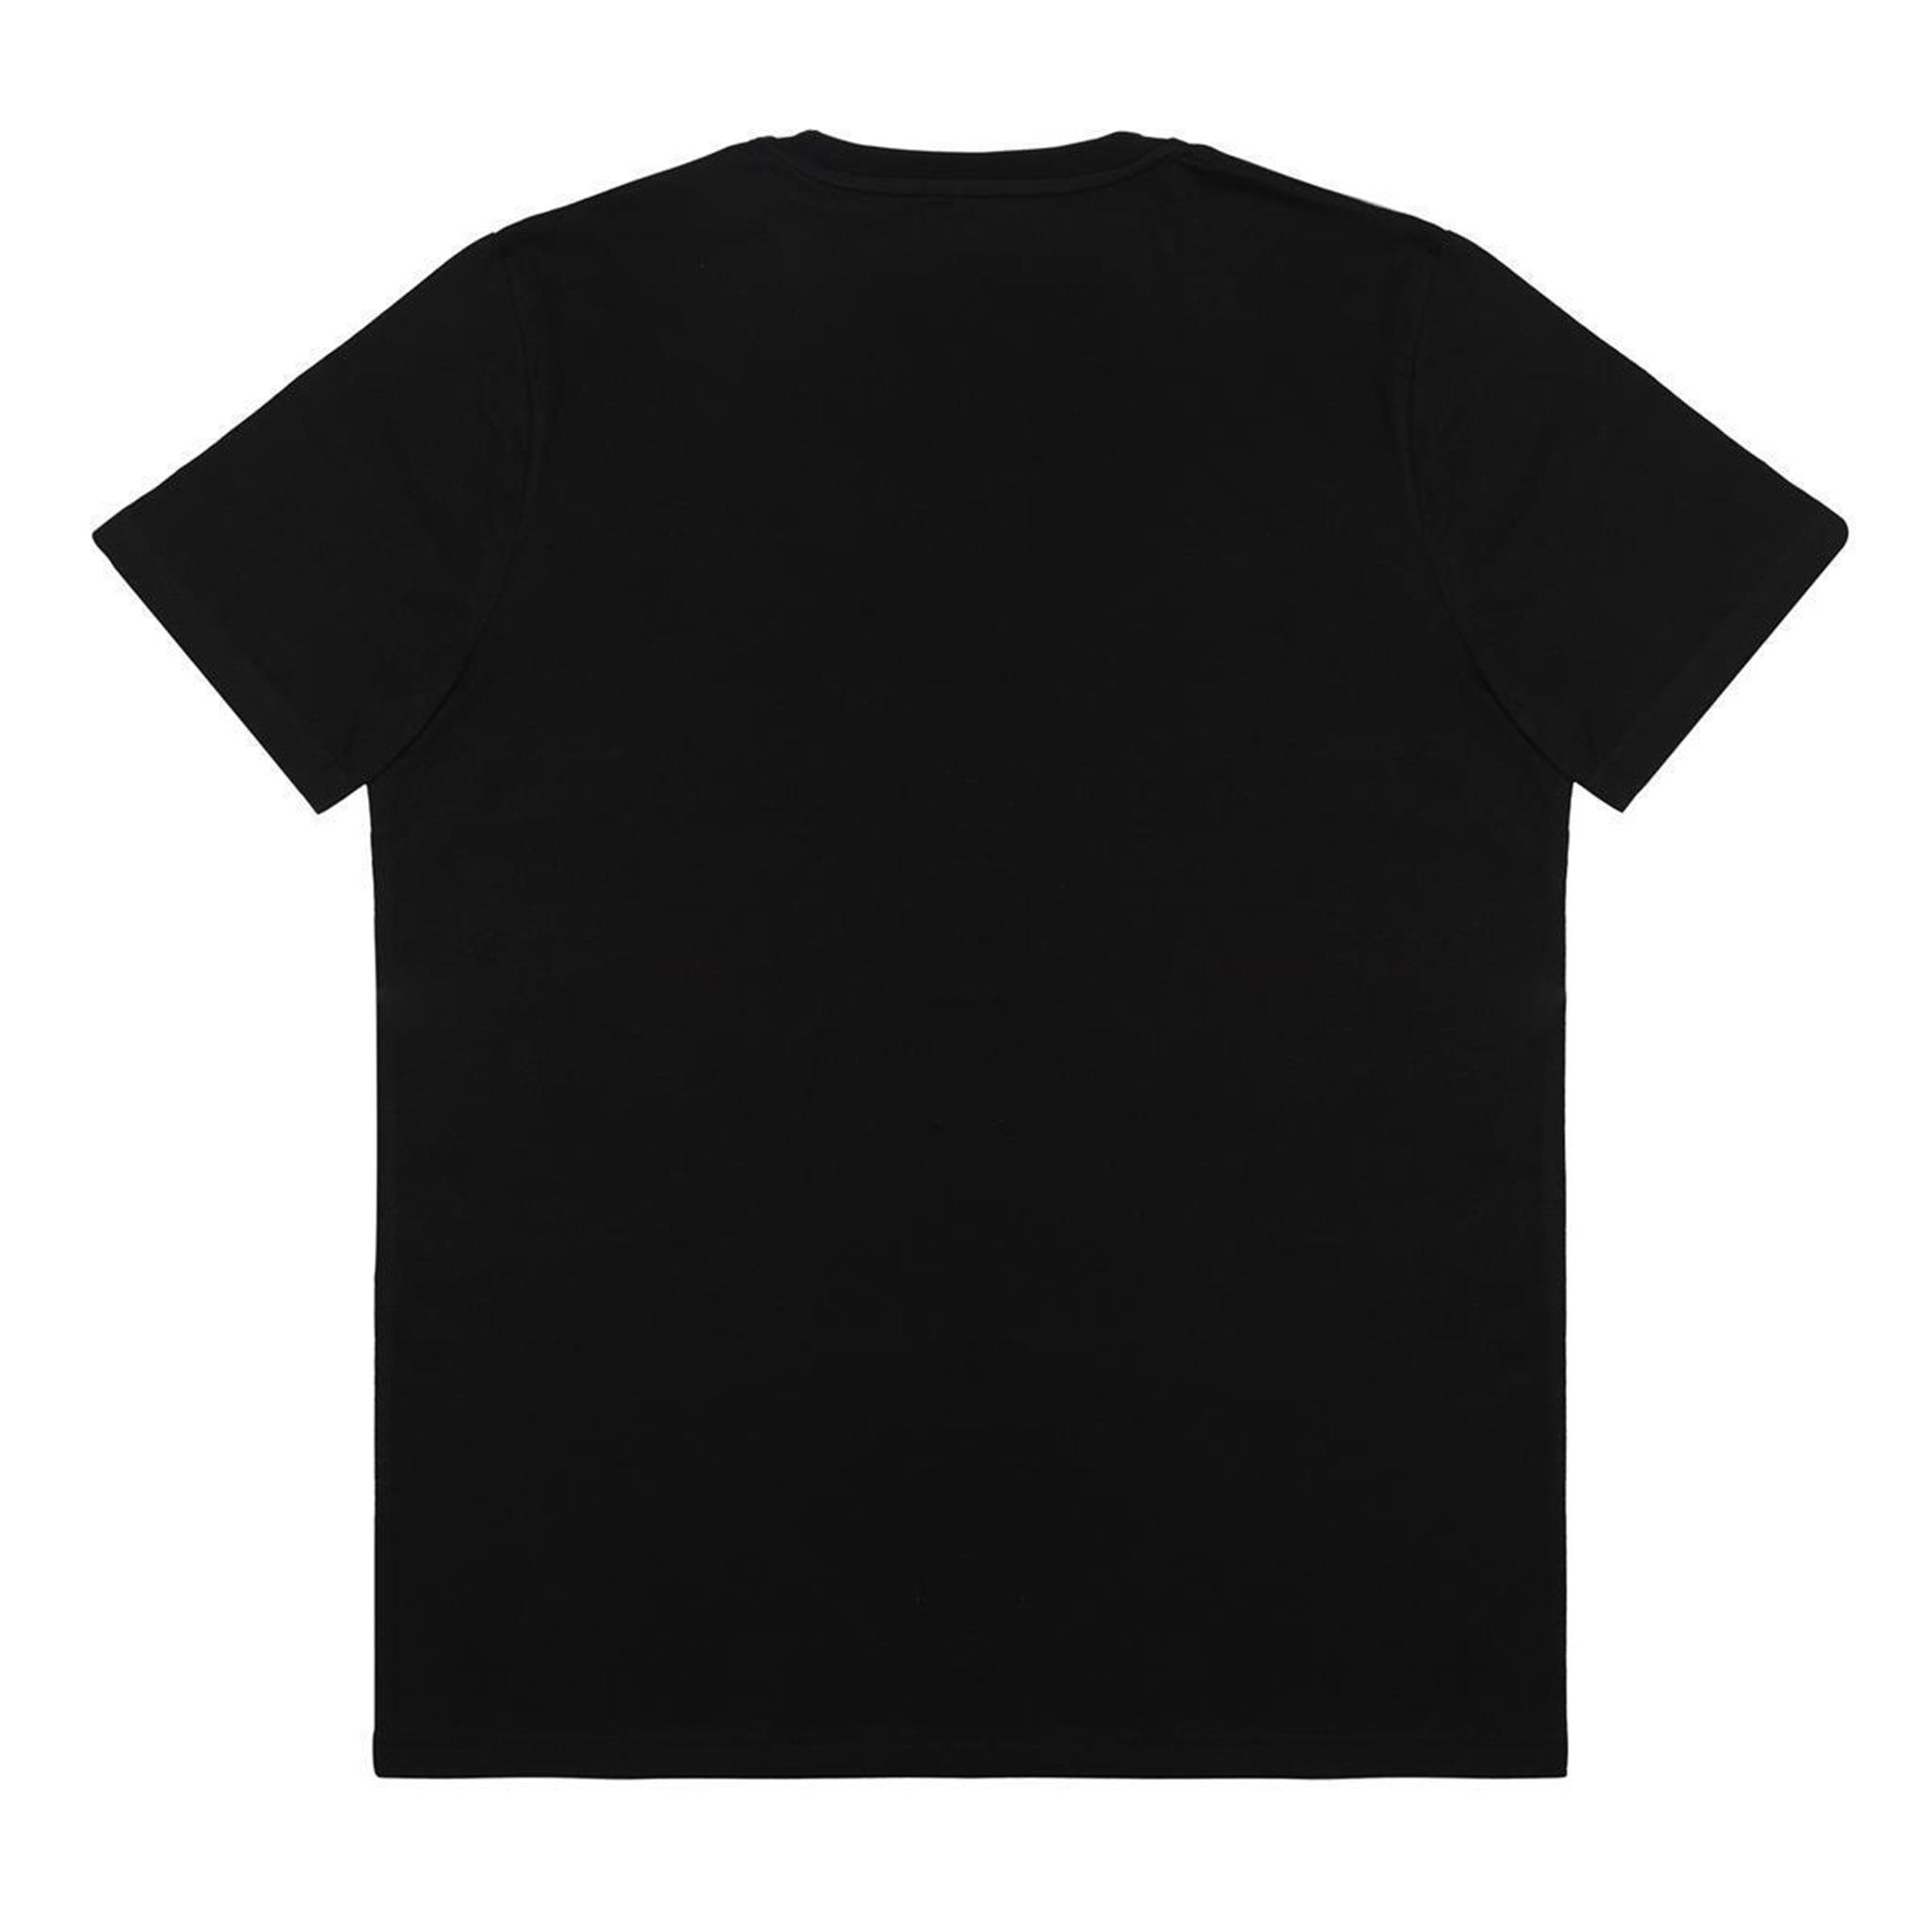 Siyah Tişört M Beden (TA0037)